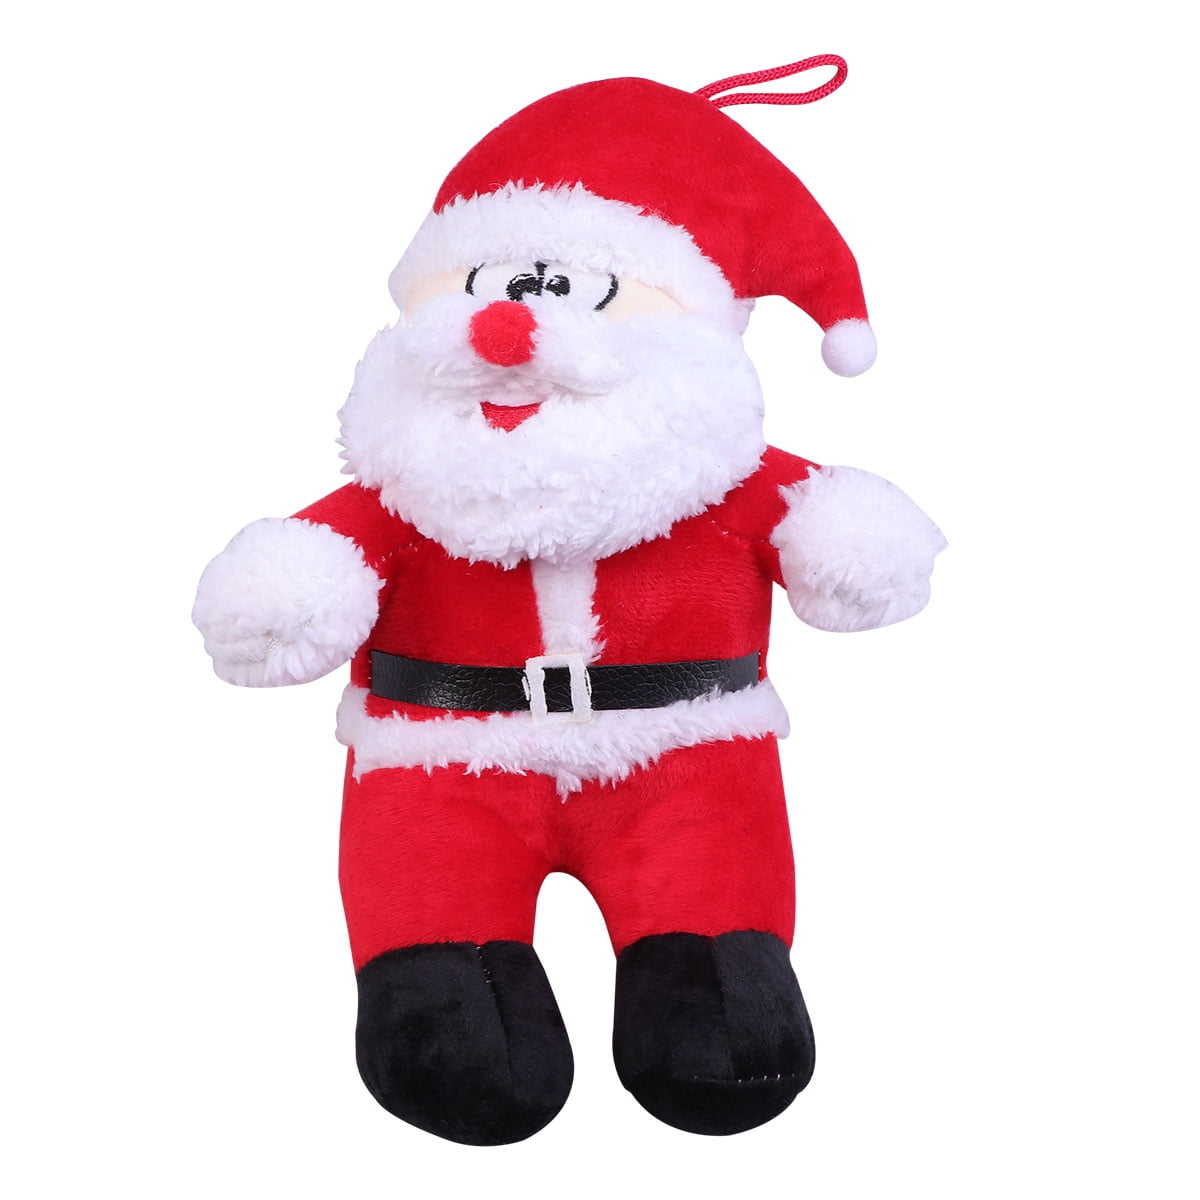 17" Santa Iron Man Super Jumbo Santa Claus Plush Toy Doll By Sega 